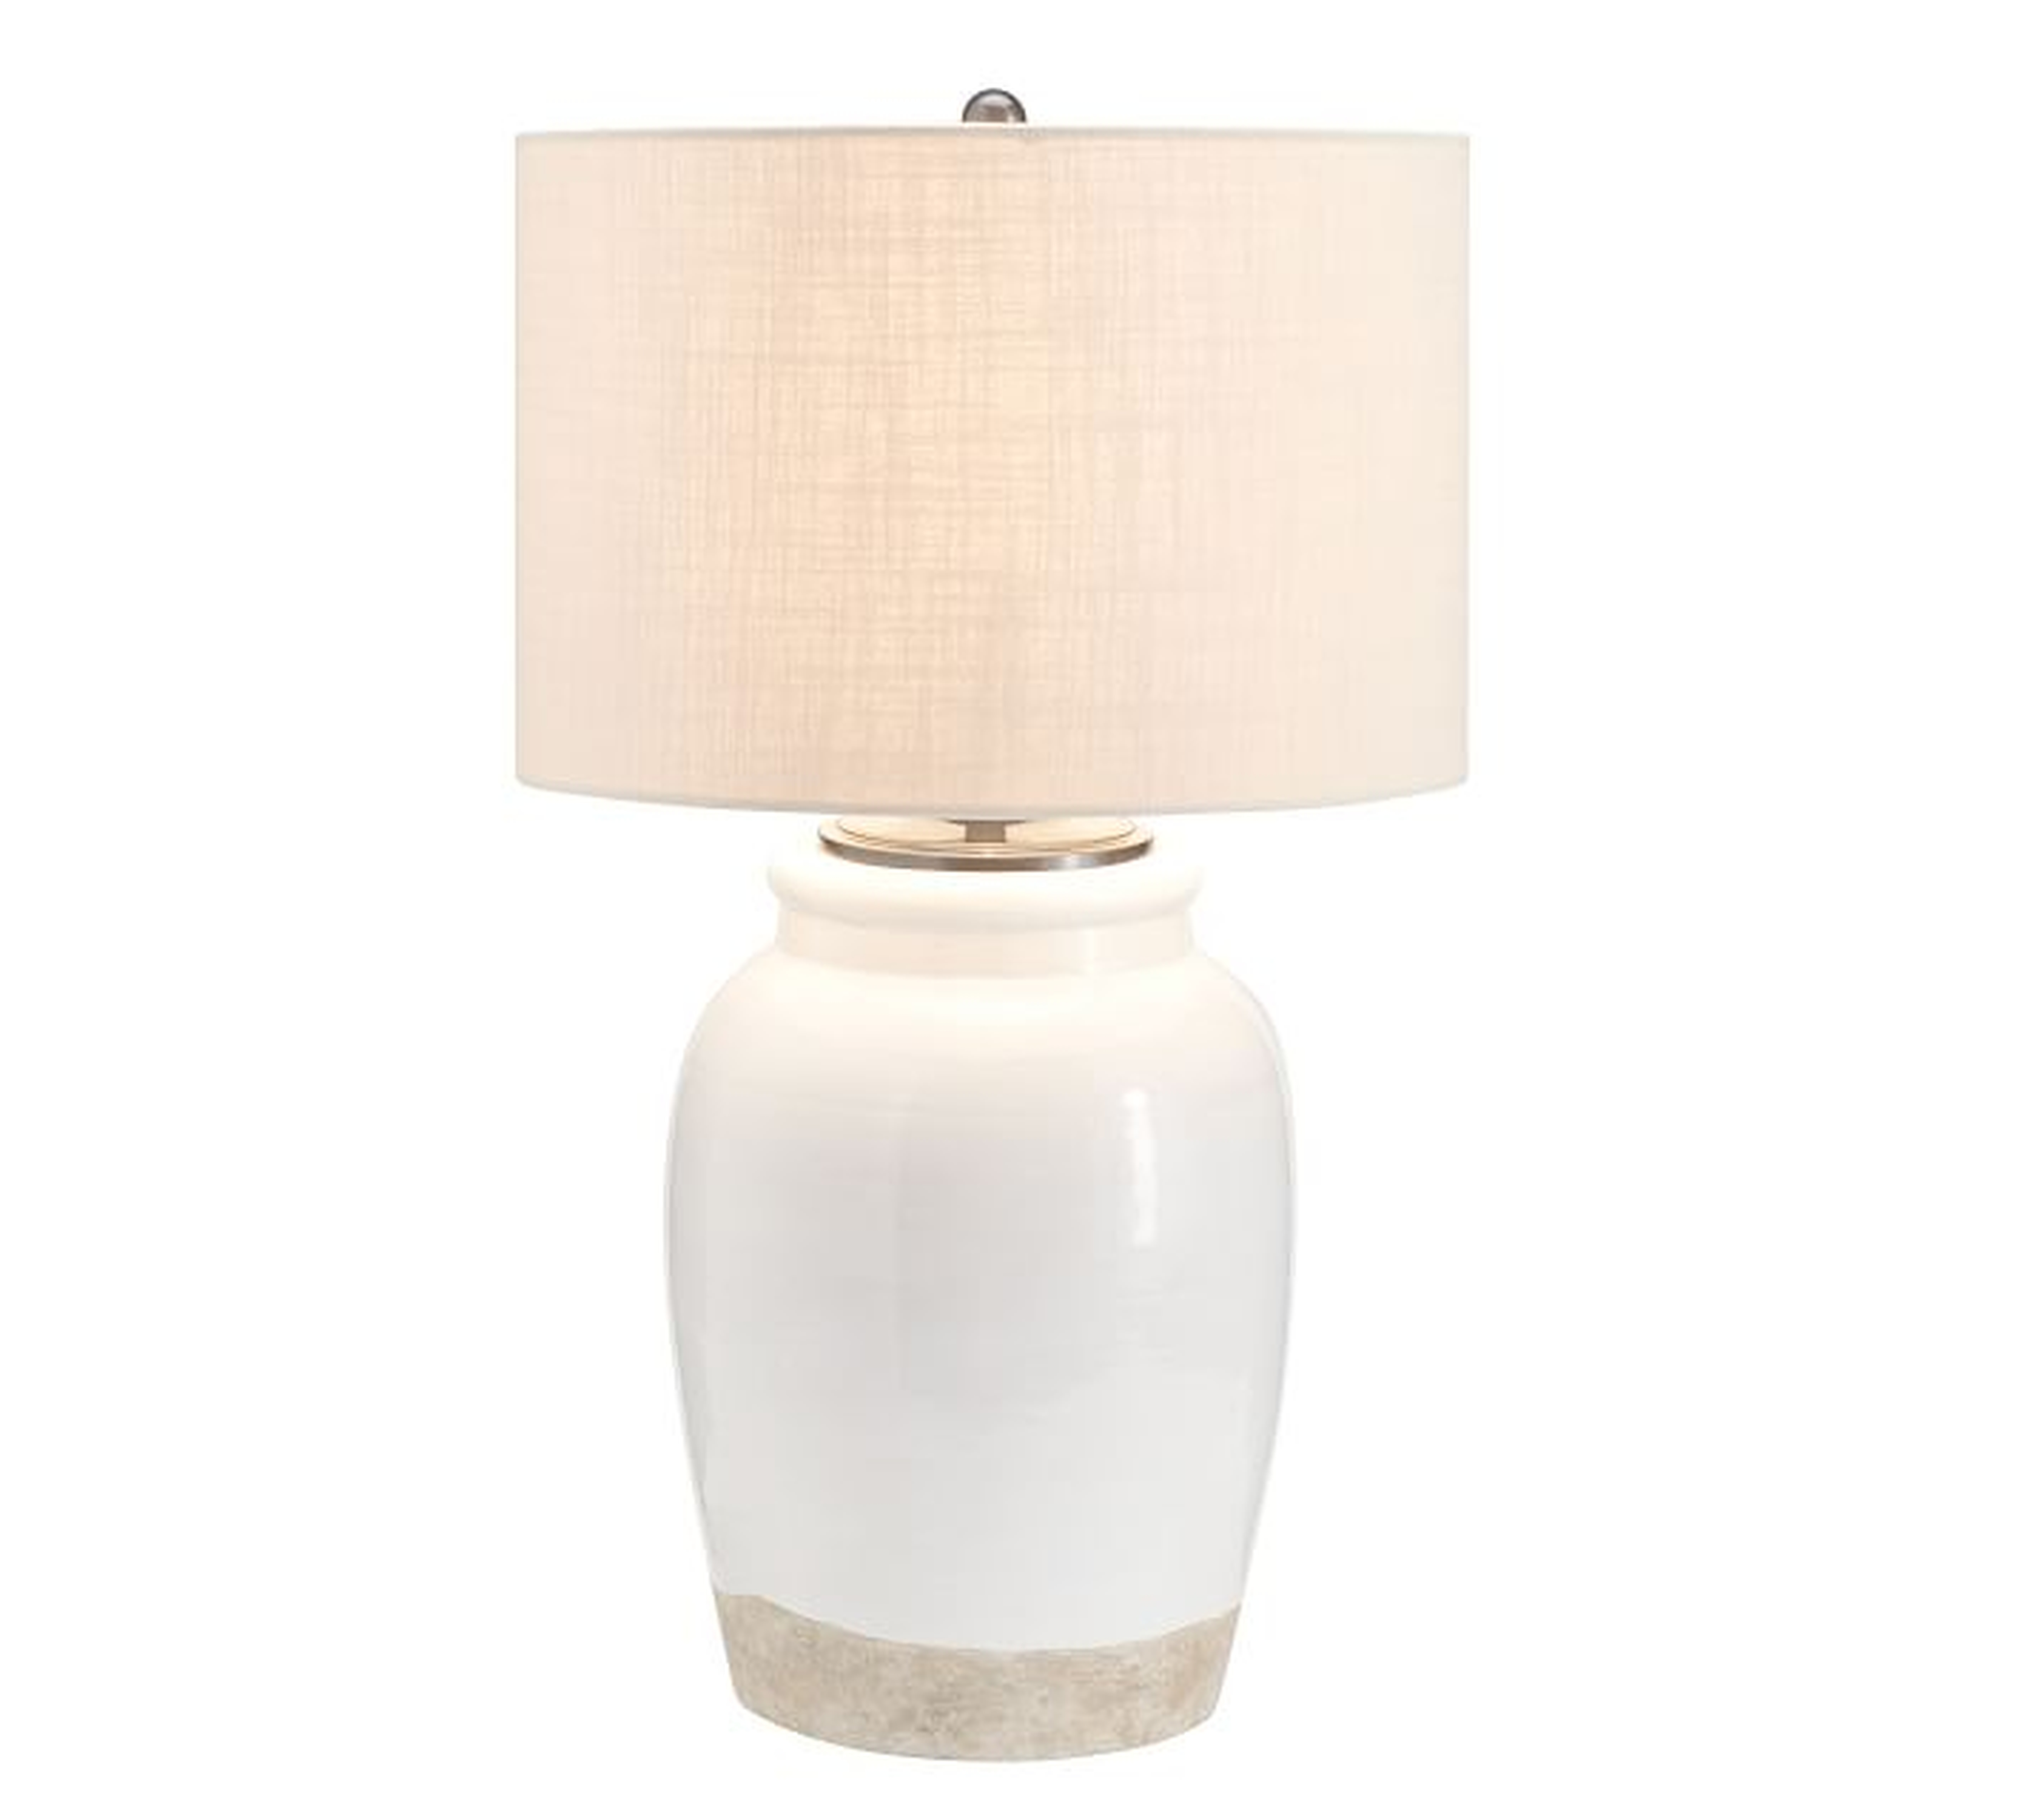 Miller Table Lamp, Medium Textured Straight Sided Shade, Sand, Small - Pottery Barn